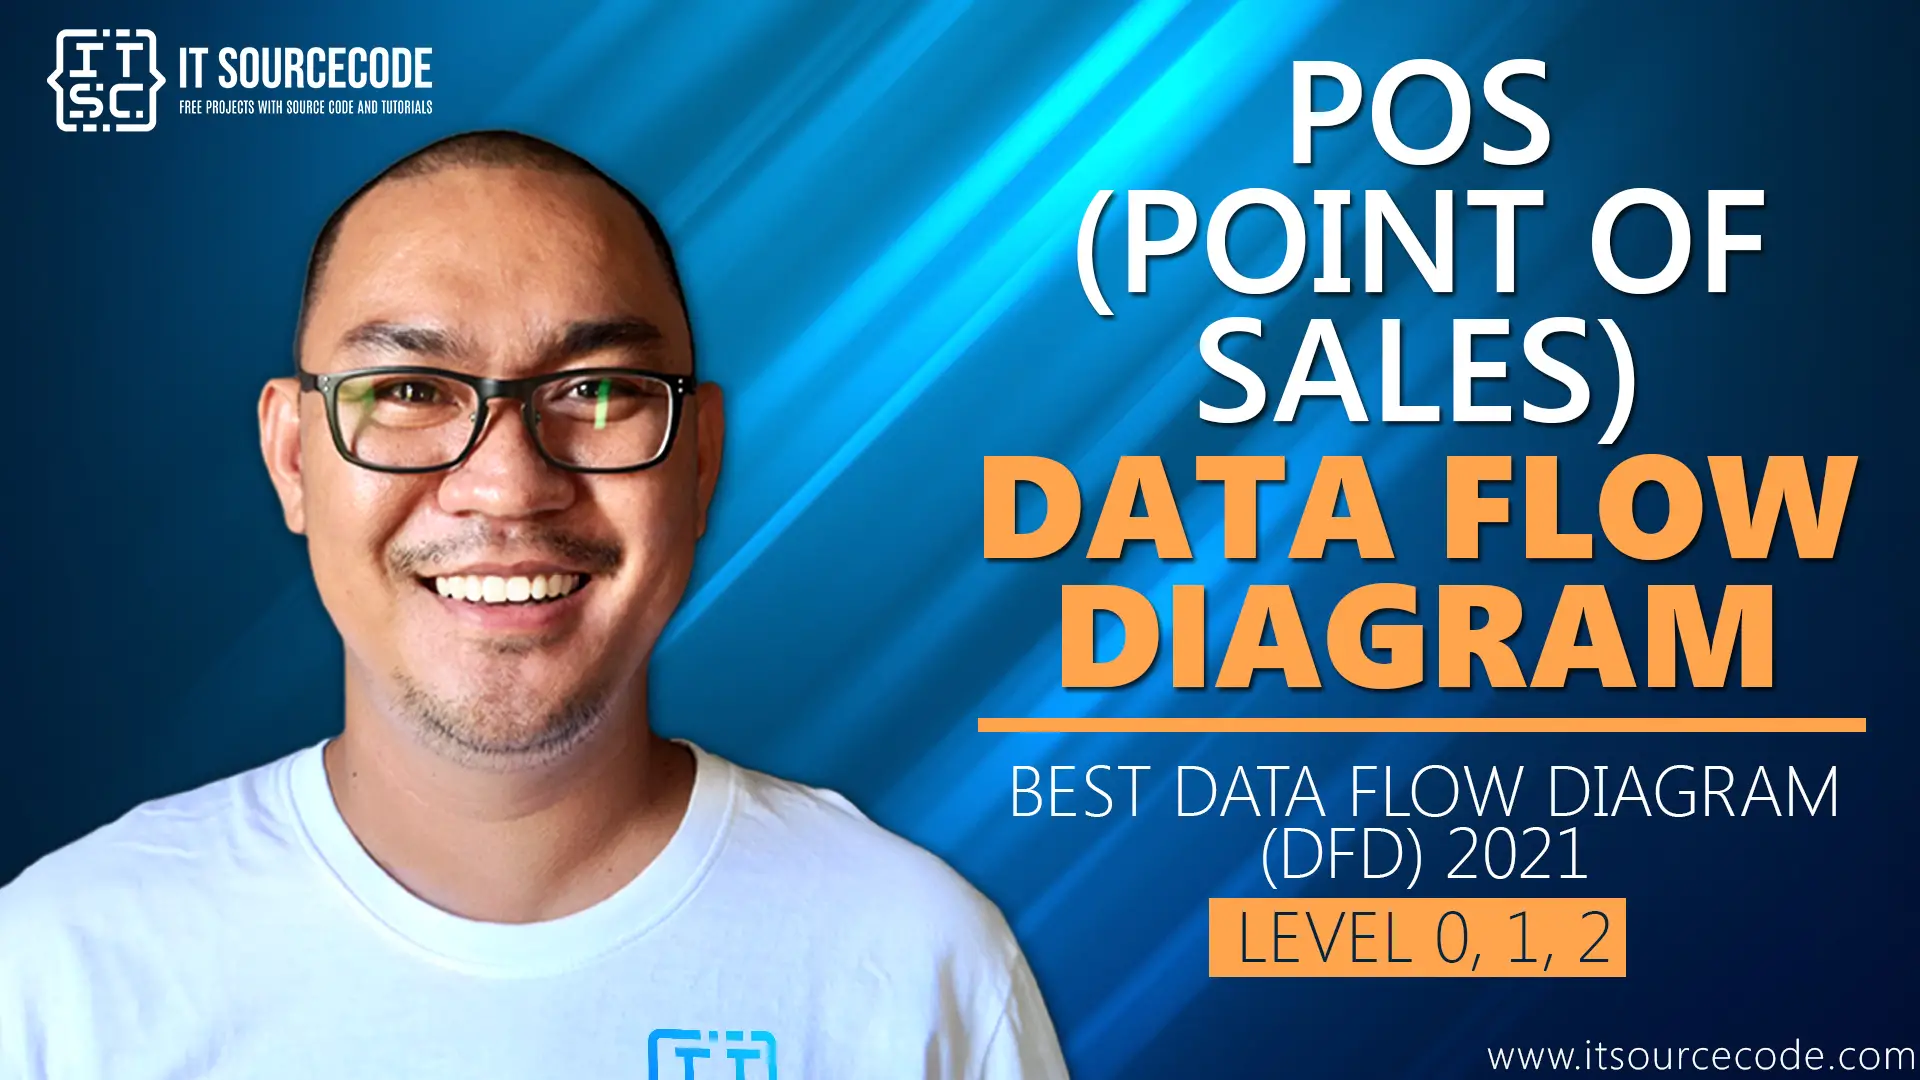 POS - Point of Sales Data Flow Diagram - Best DFD Level 0 1 2